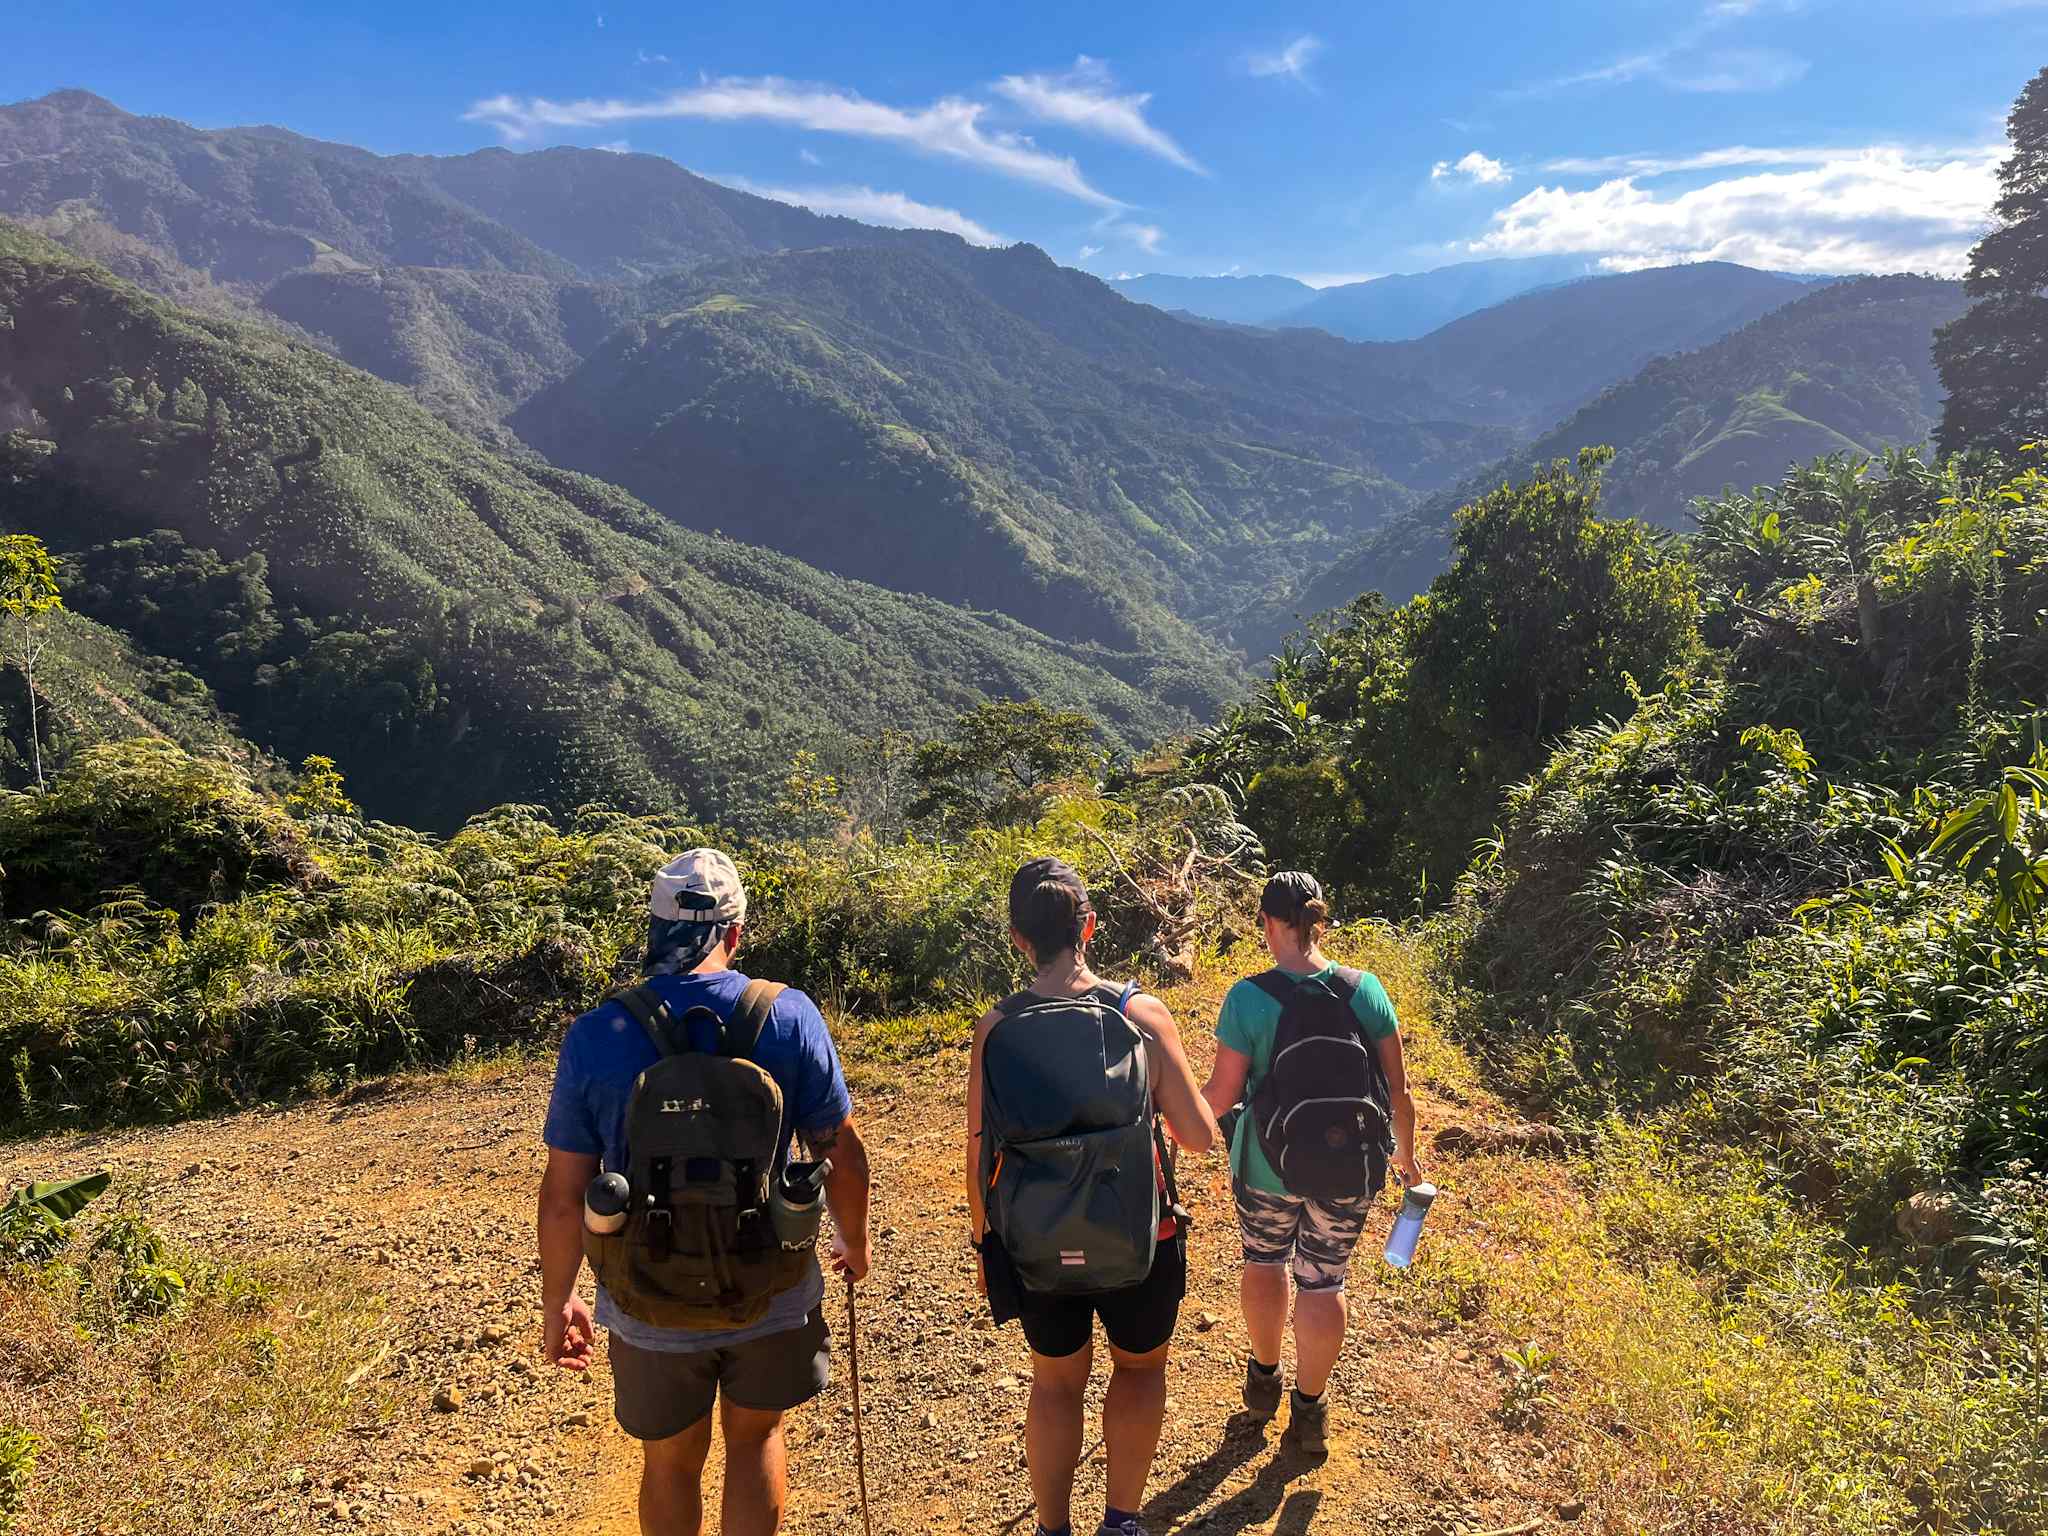 Trekkers ascending into the hills along the Camino de Costa Rica